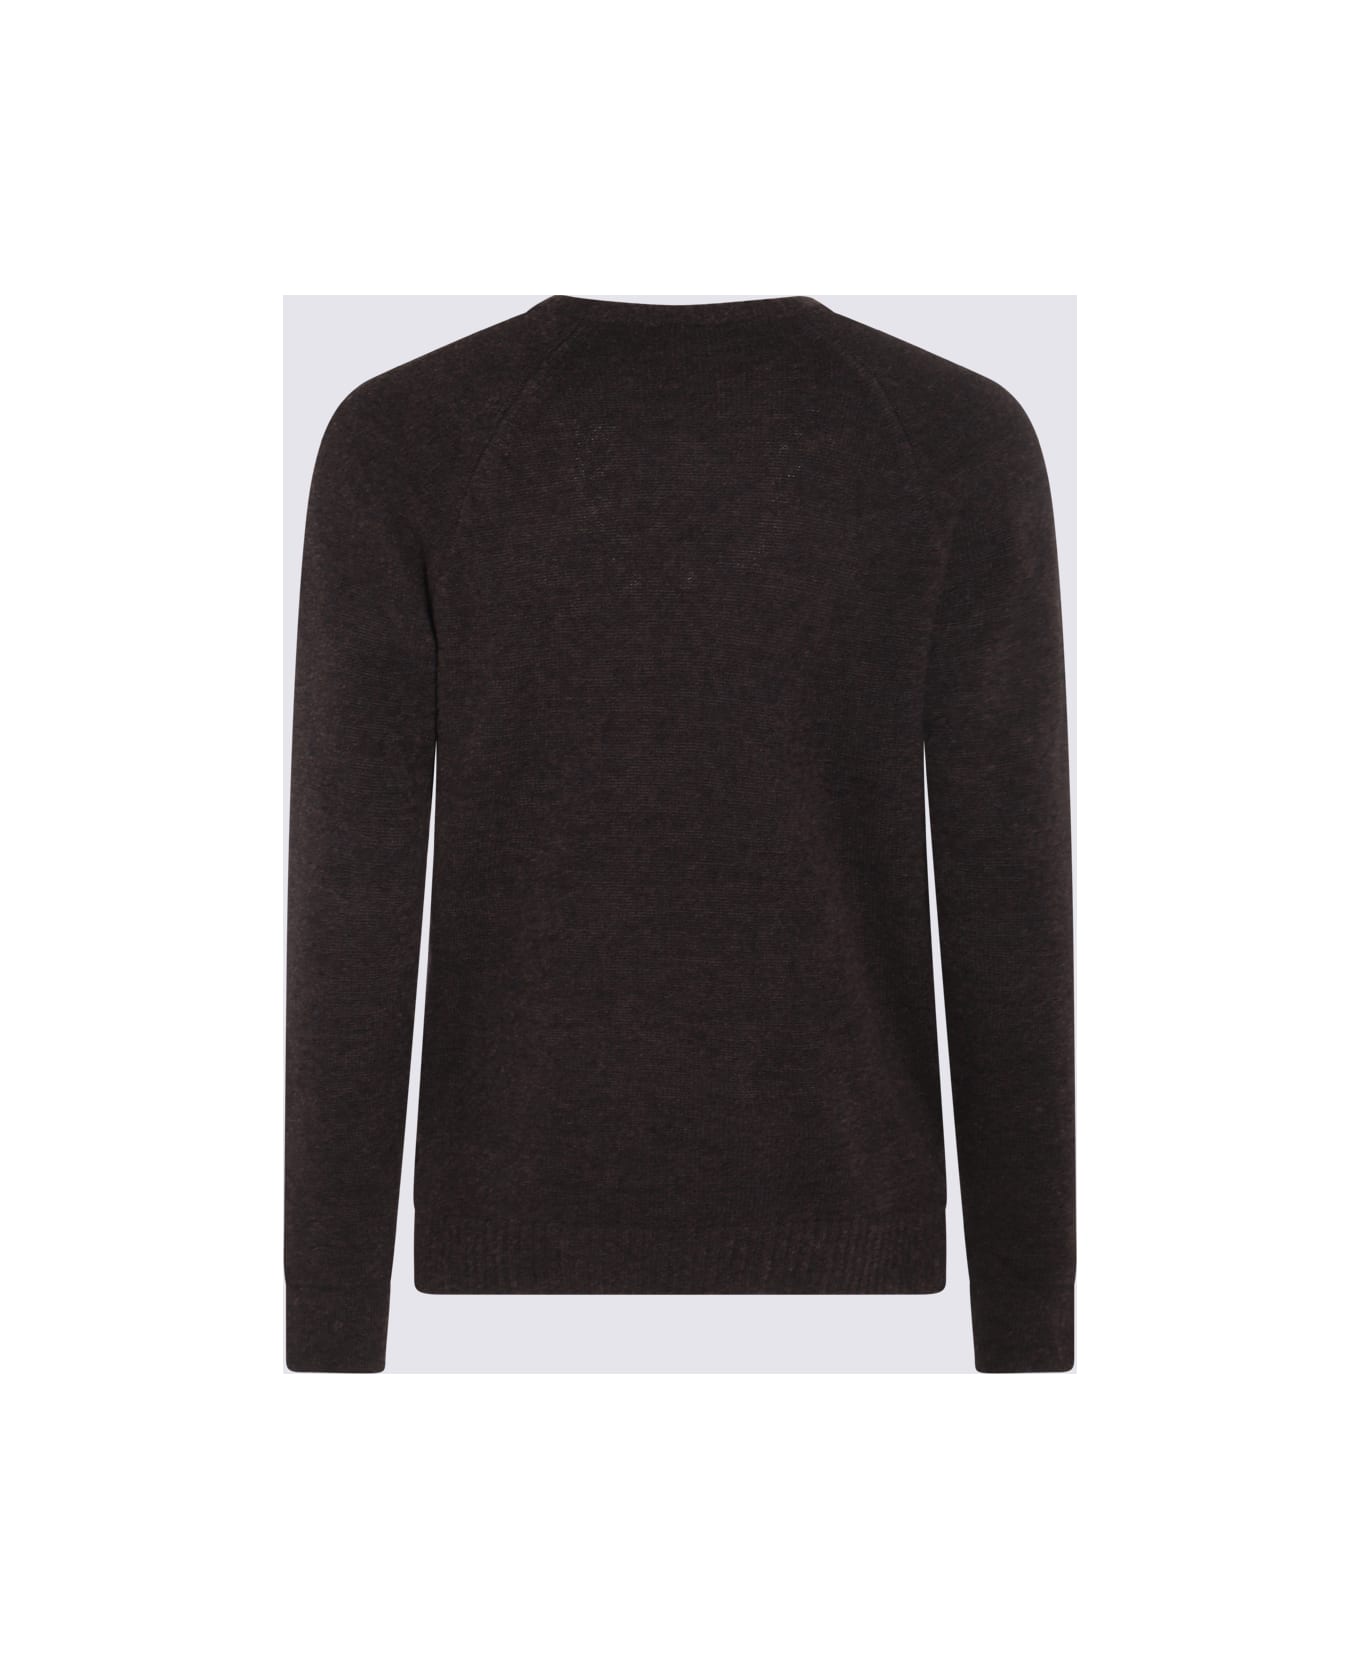 Zanone Brown Wool Blend Sweater - Brown ニットウェア